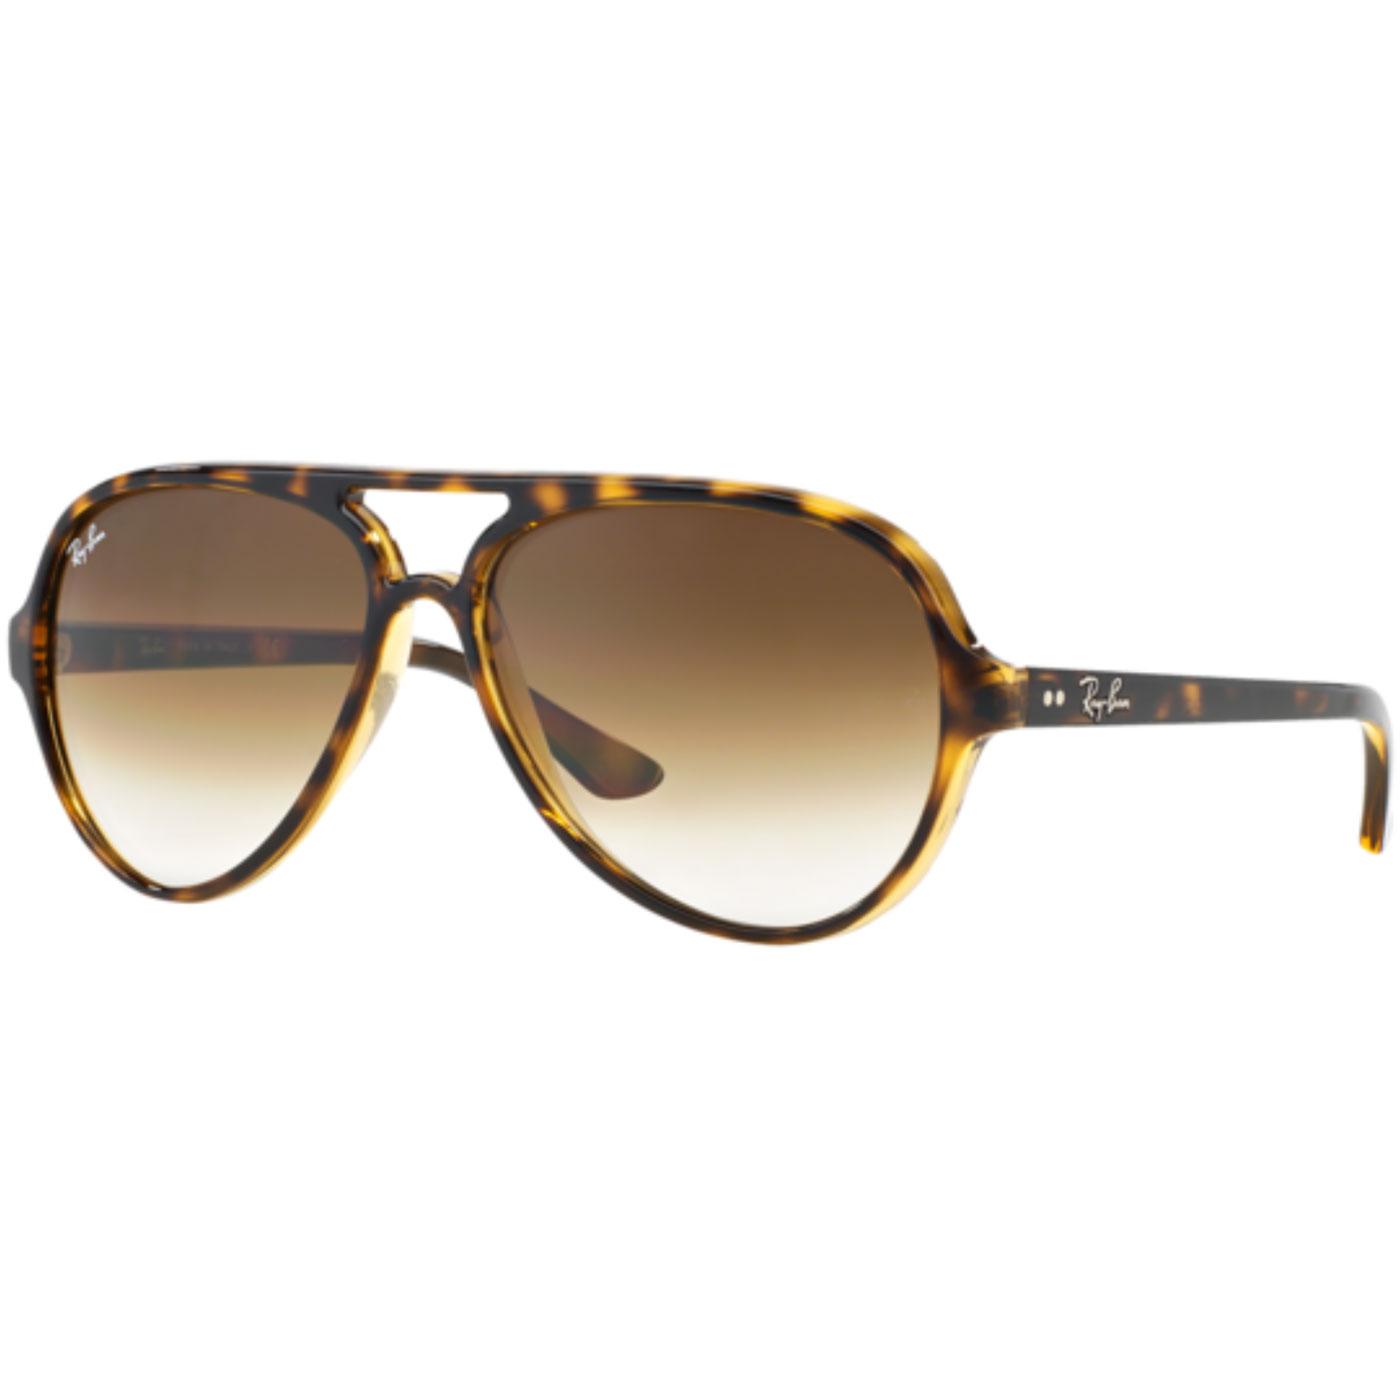 Cats 5000 Aviator Sunglasses | Ray-Ban Retro Sixties Mod Brown Shades